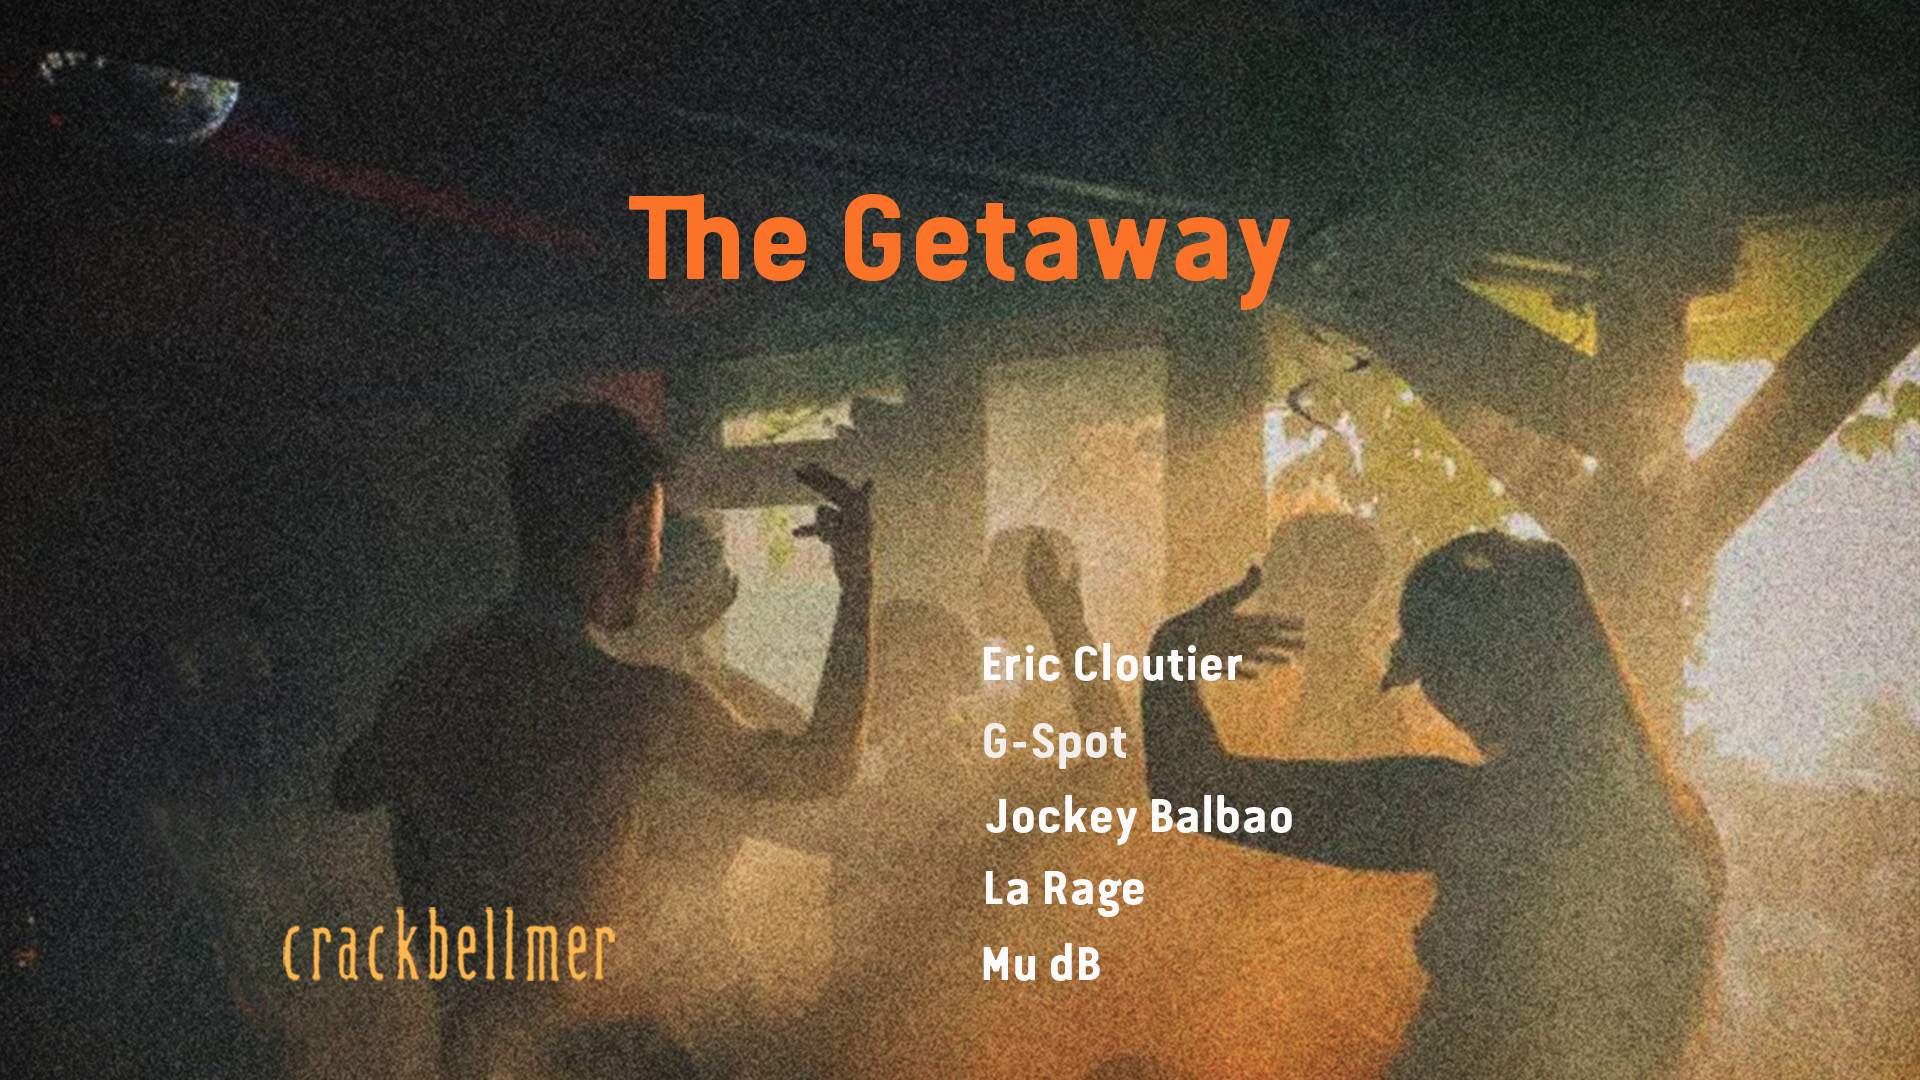 The Getaway with Eric Cloutier, G-Spot, Mu dB, Jockey Balboa, La Rage - フライヤー表